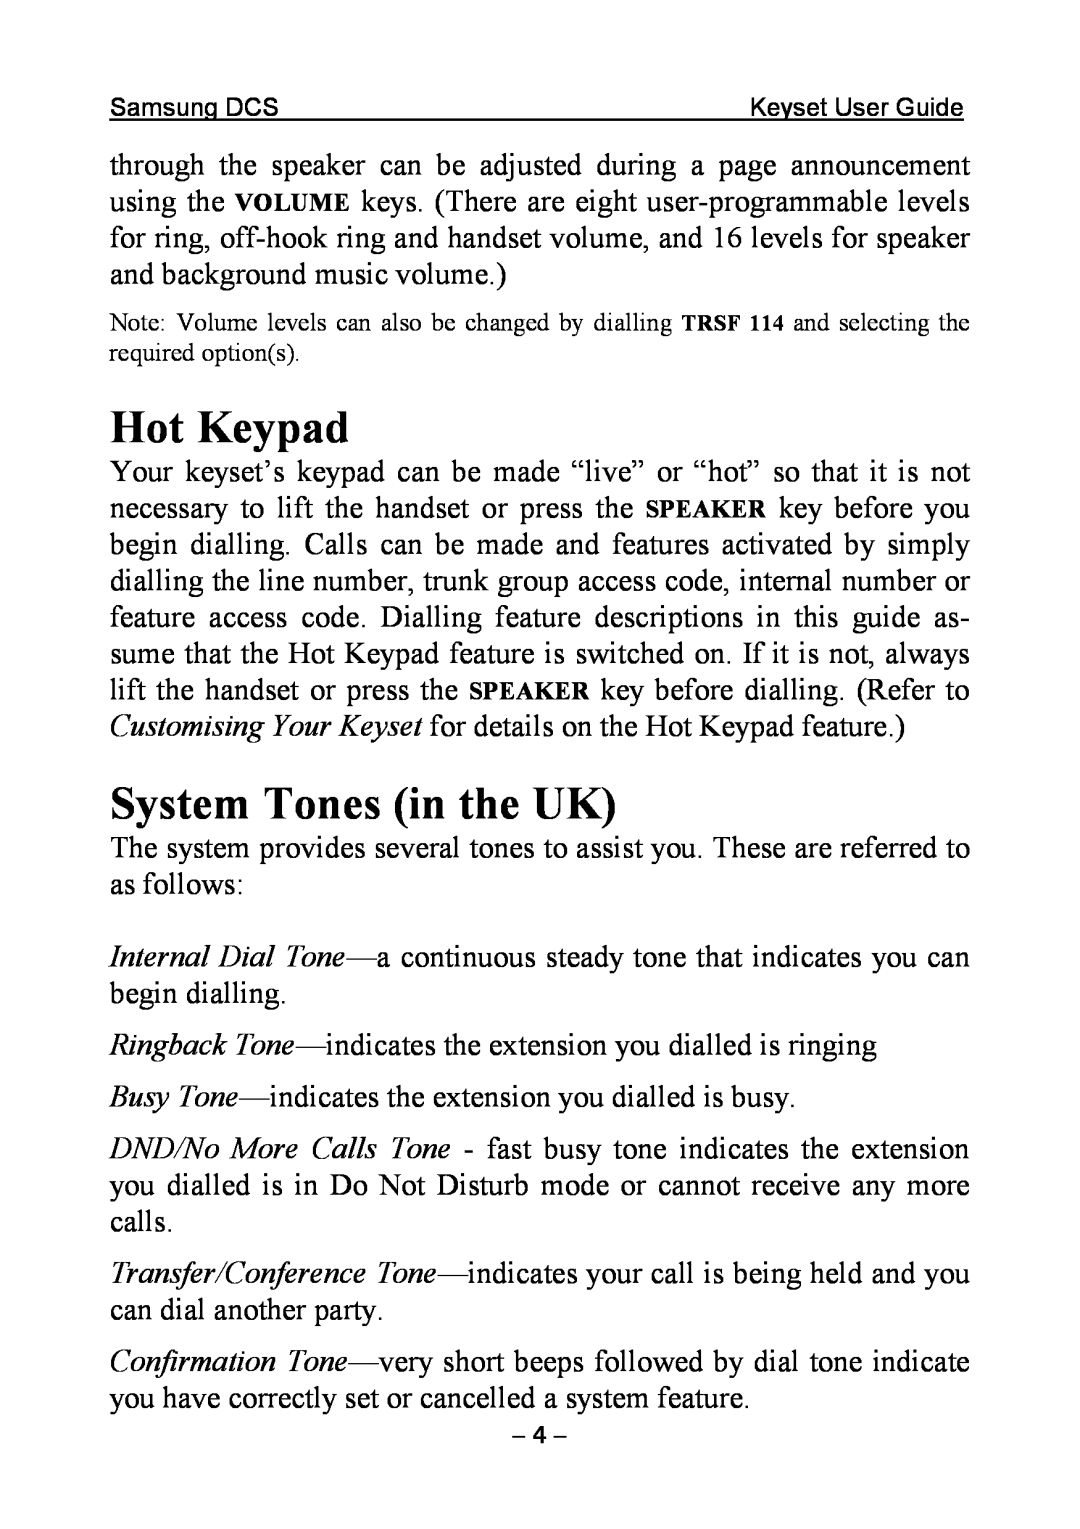 Samsung DCS KEYSET manual Hot Keypad, System Tones in the UK 